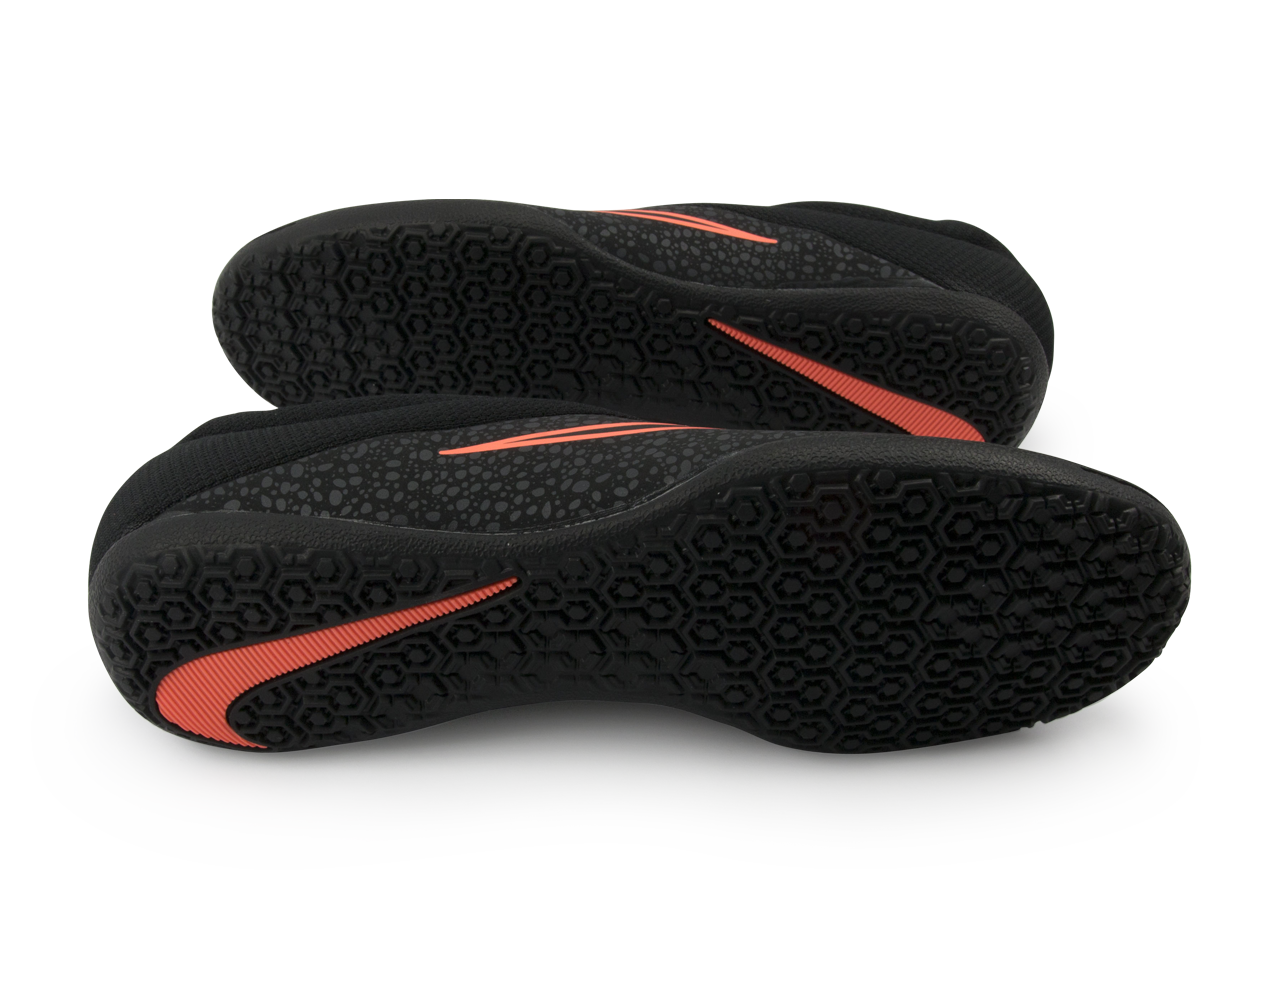 Nike Men's MercurialX Indoor Soccer Shoes Black/Black/Anthracite – Azteca